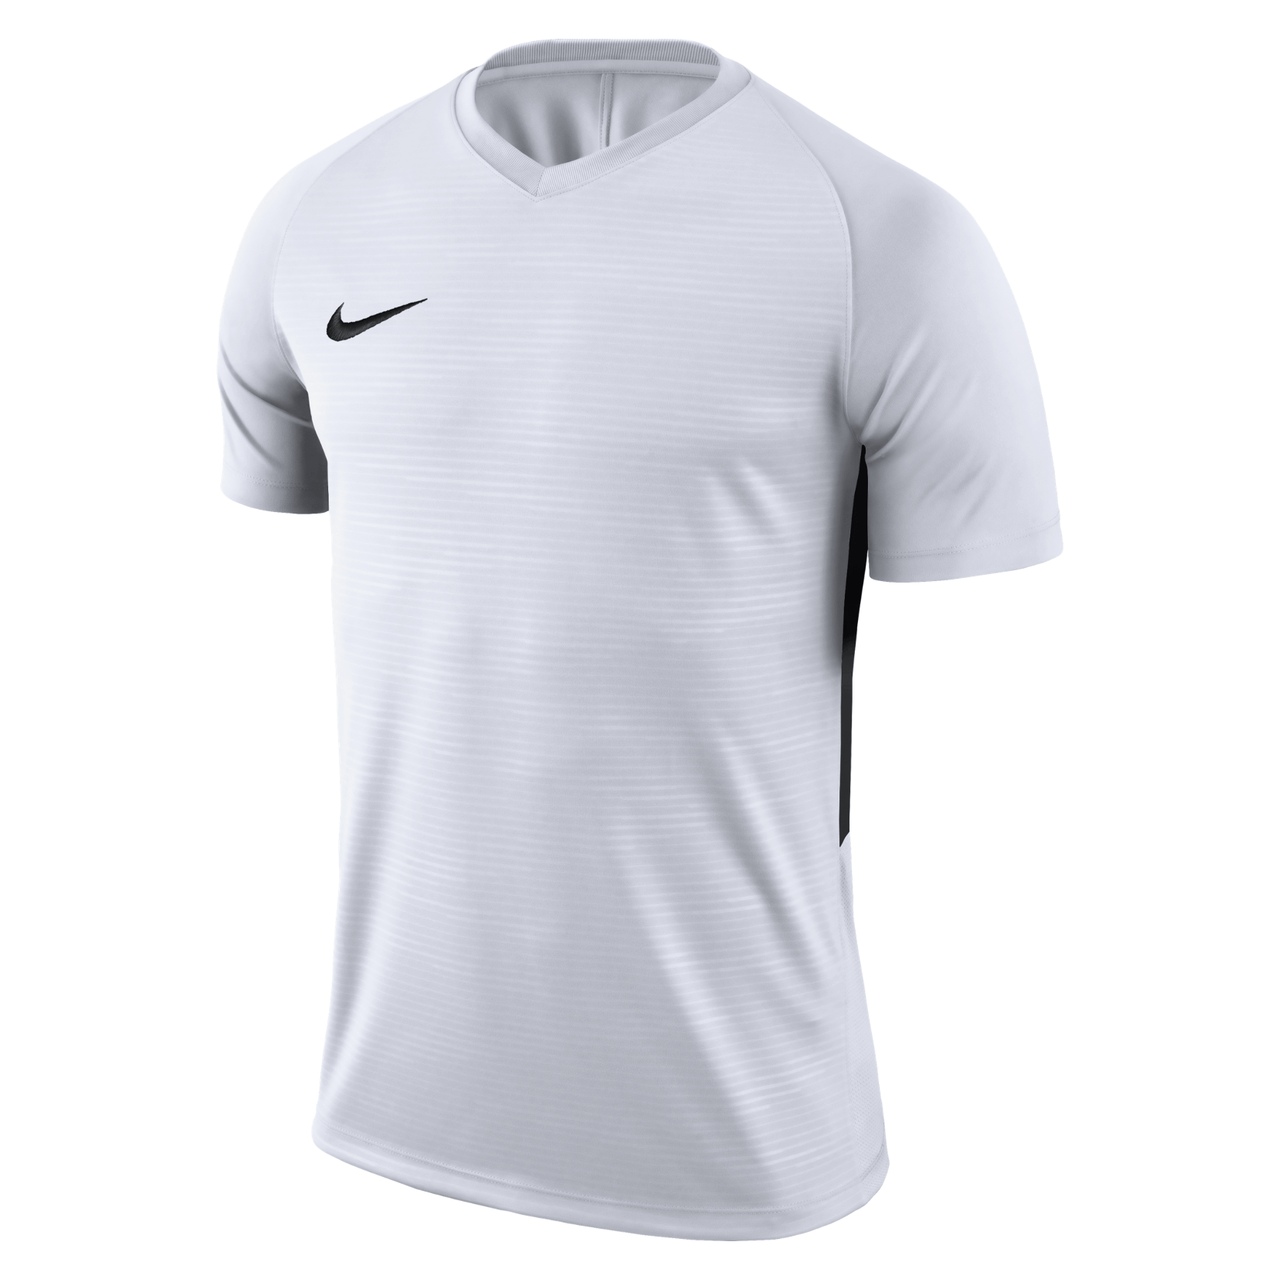 Nike Tiempo Premier Jersey - Short Sleeve